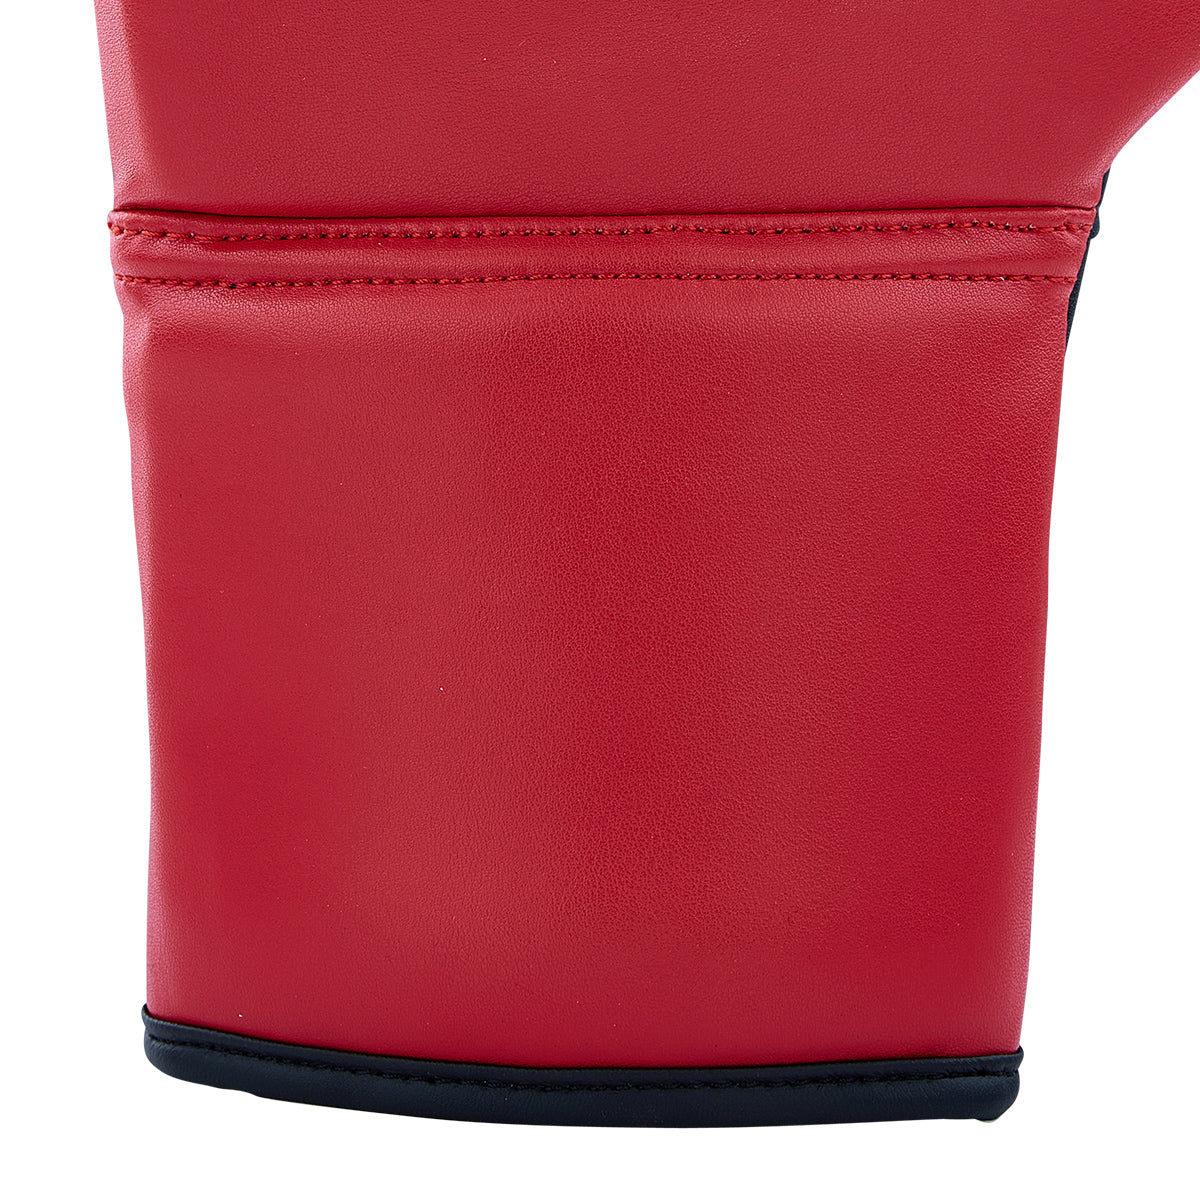 Custom Leather Lace Up Bag Glove